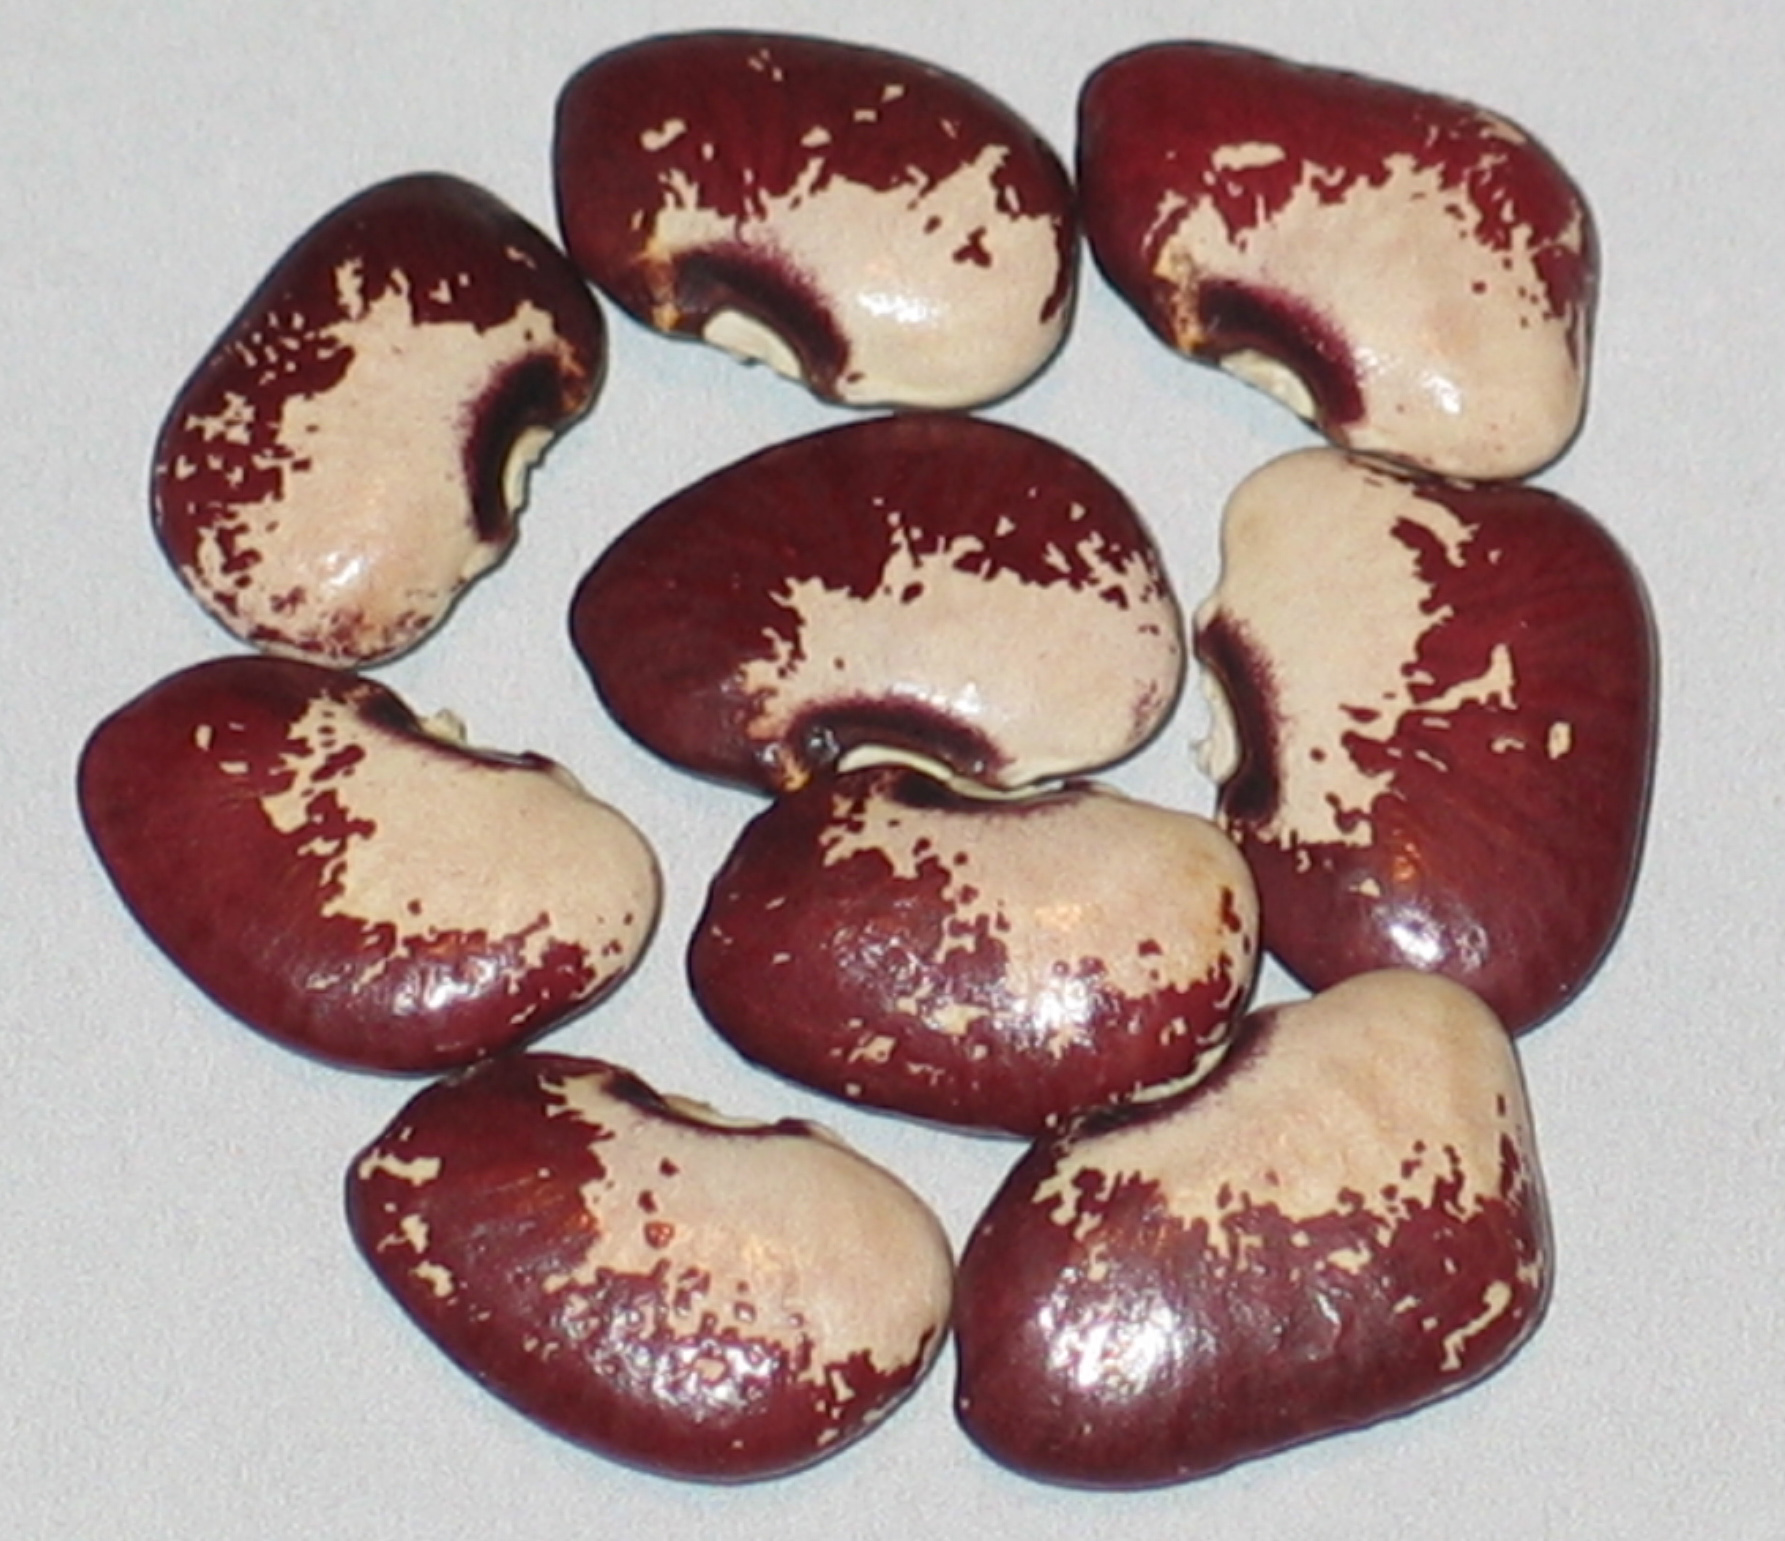 image of Toms Divide beans